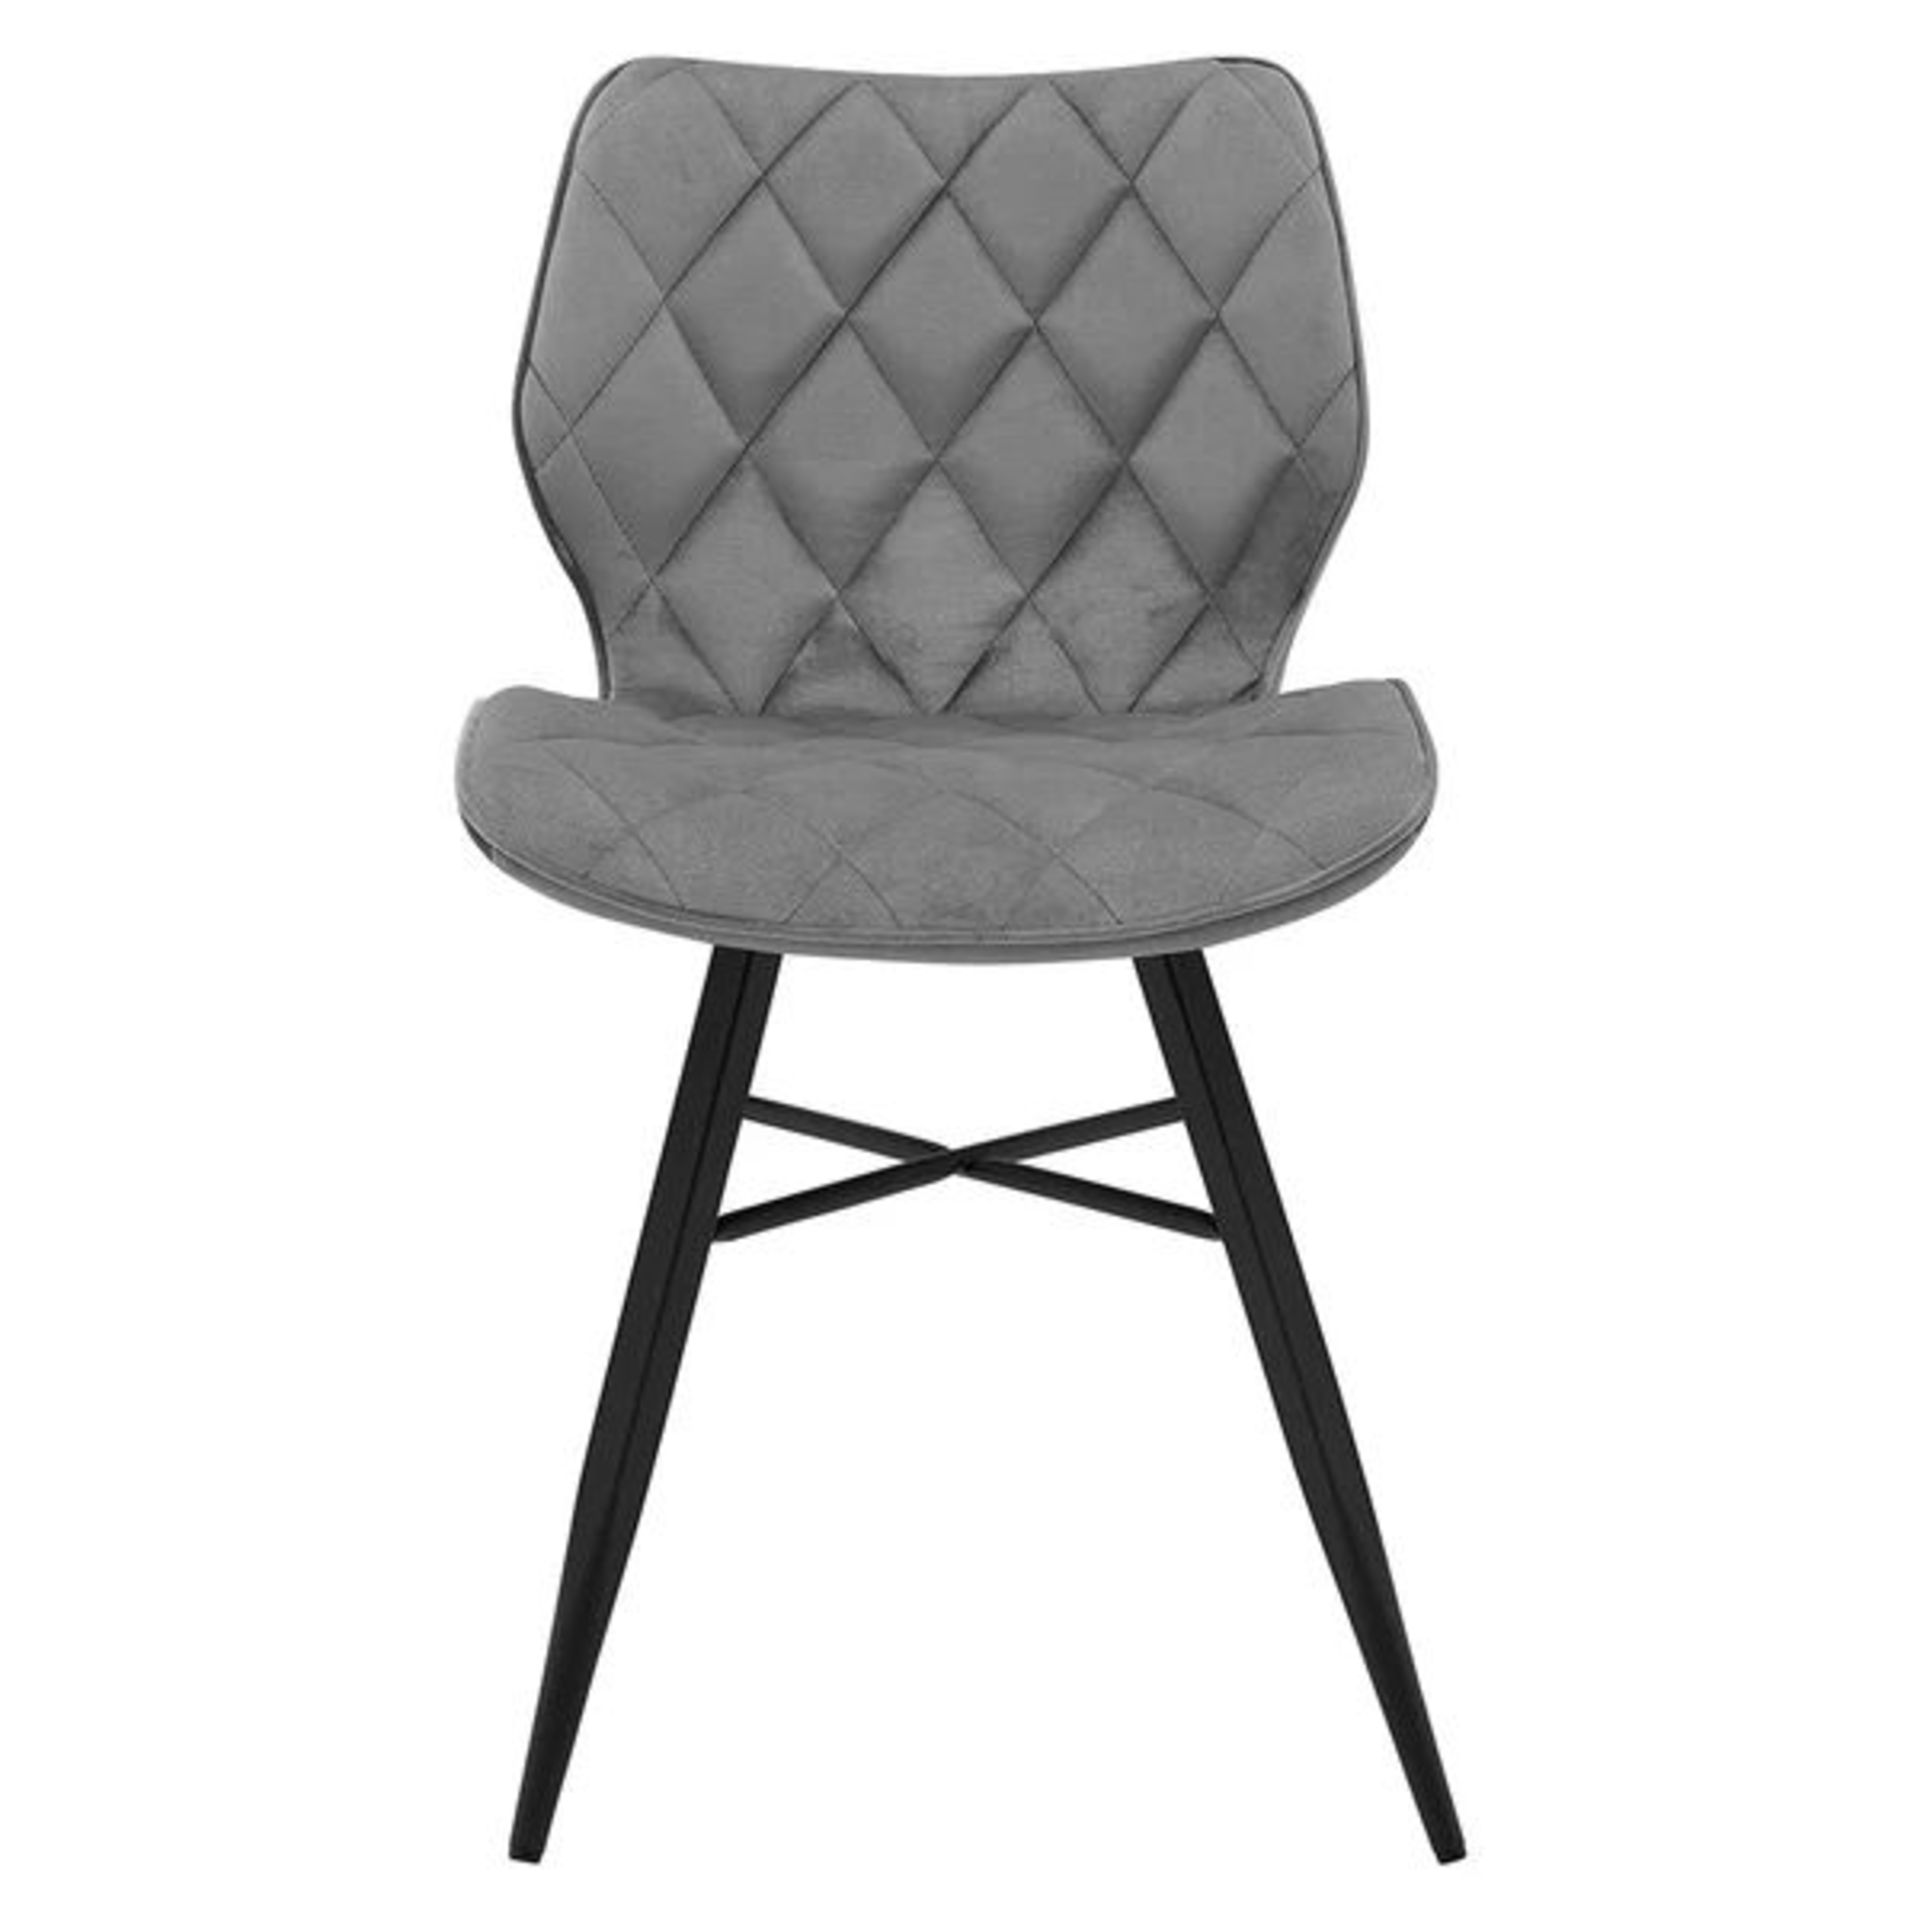 Set of 2 Ampney Diamond Stitch Light Grey Velvet Dining Chair Set of 2 with Metal Legs. - R14. - Image 2 of 2